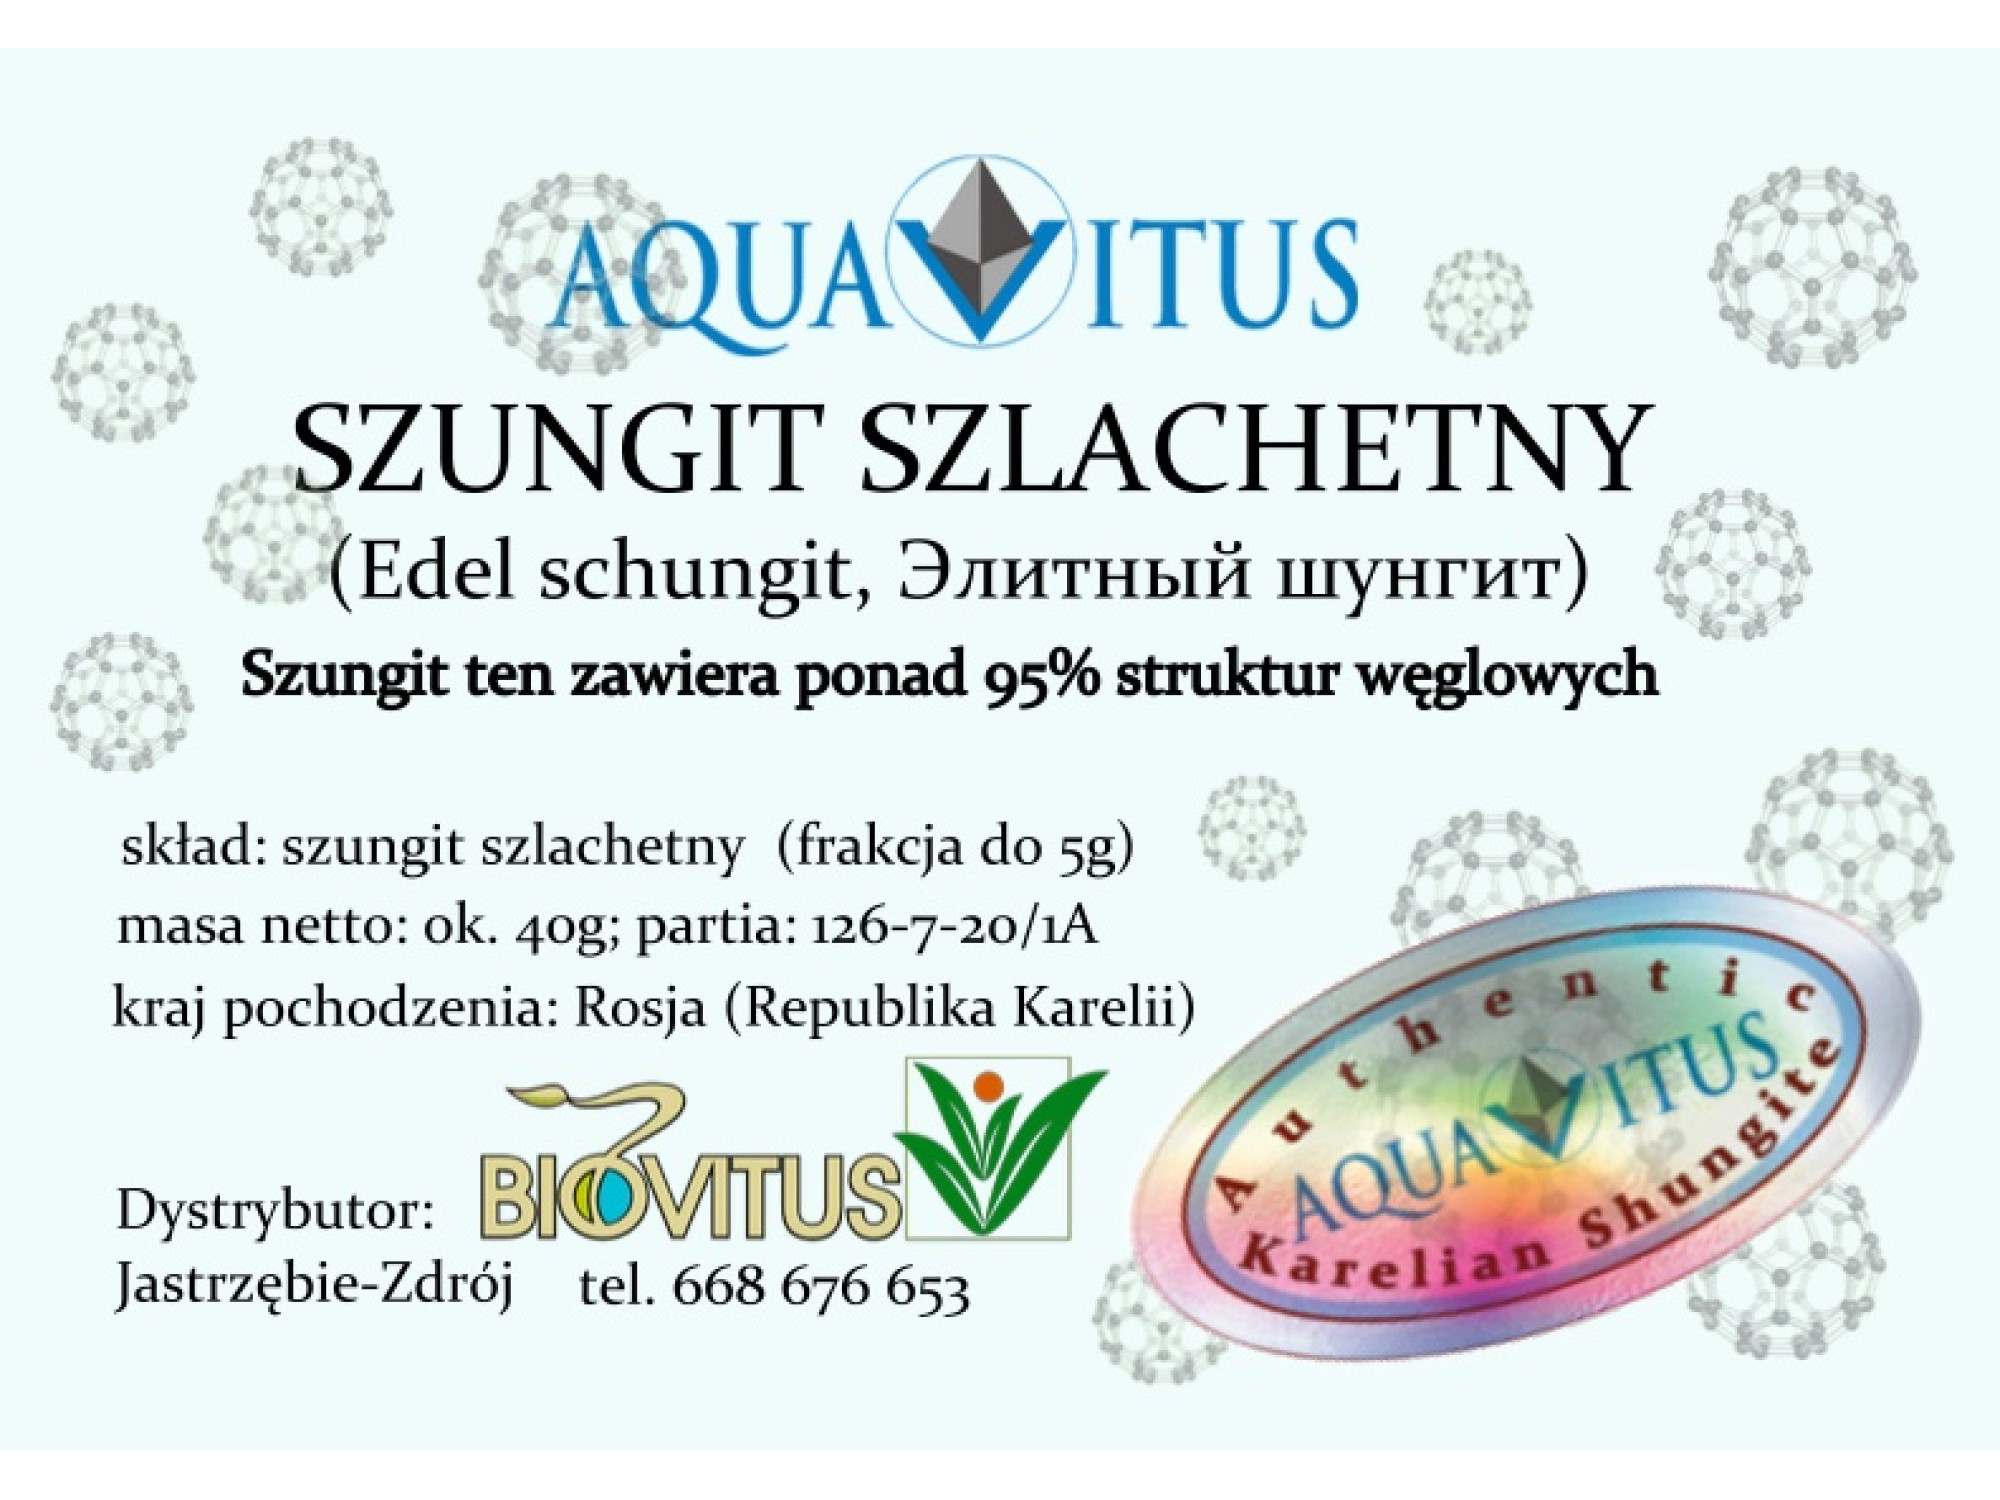 Szungit szlachetny AquaVitus (Elite shungite, Edel schungit) 40g do wody